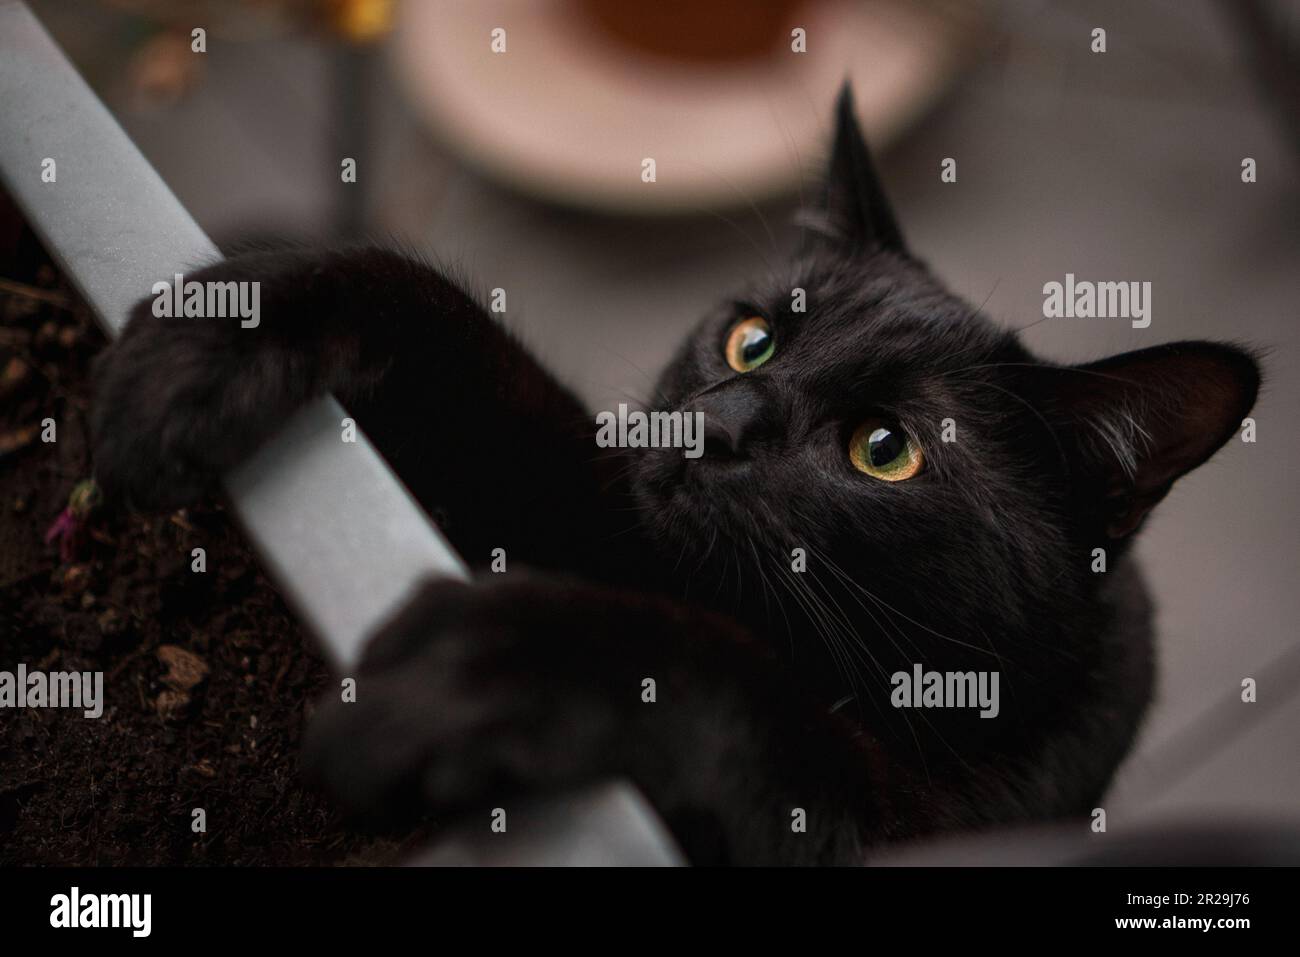 https://c8.alamy.com/comp/2R29J76/naughty-curious-cat-alone-at-home-2R29J76.jpg